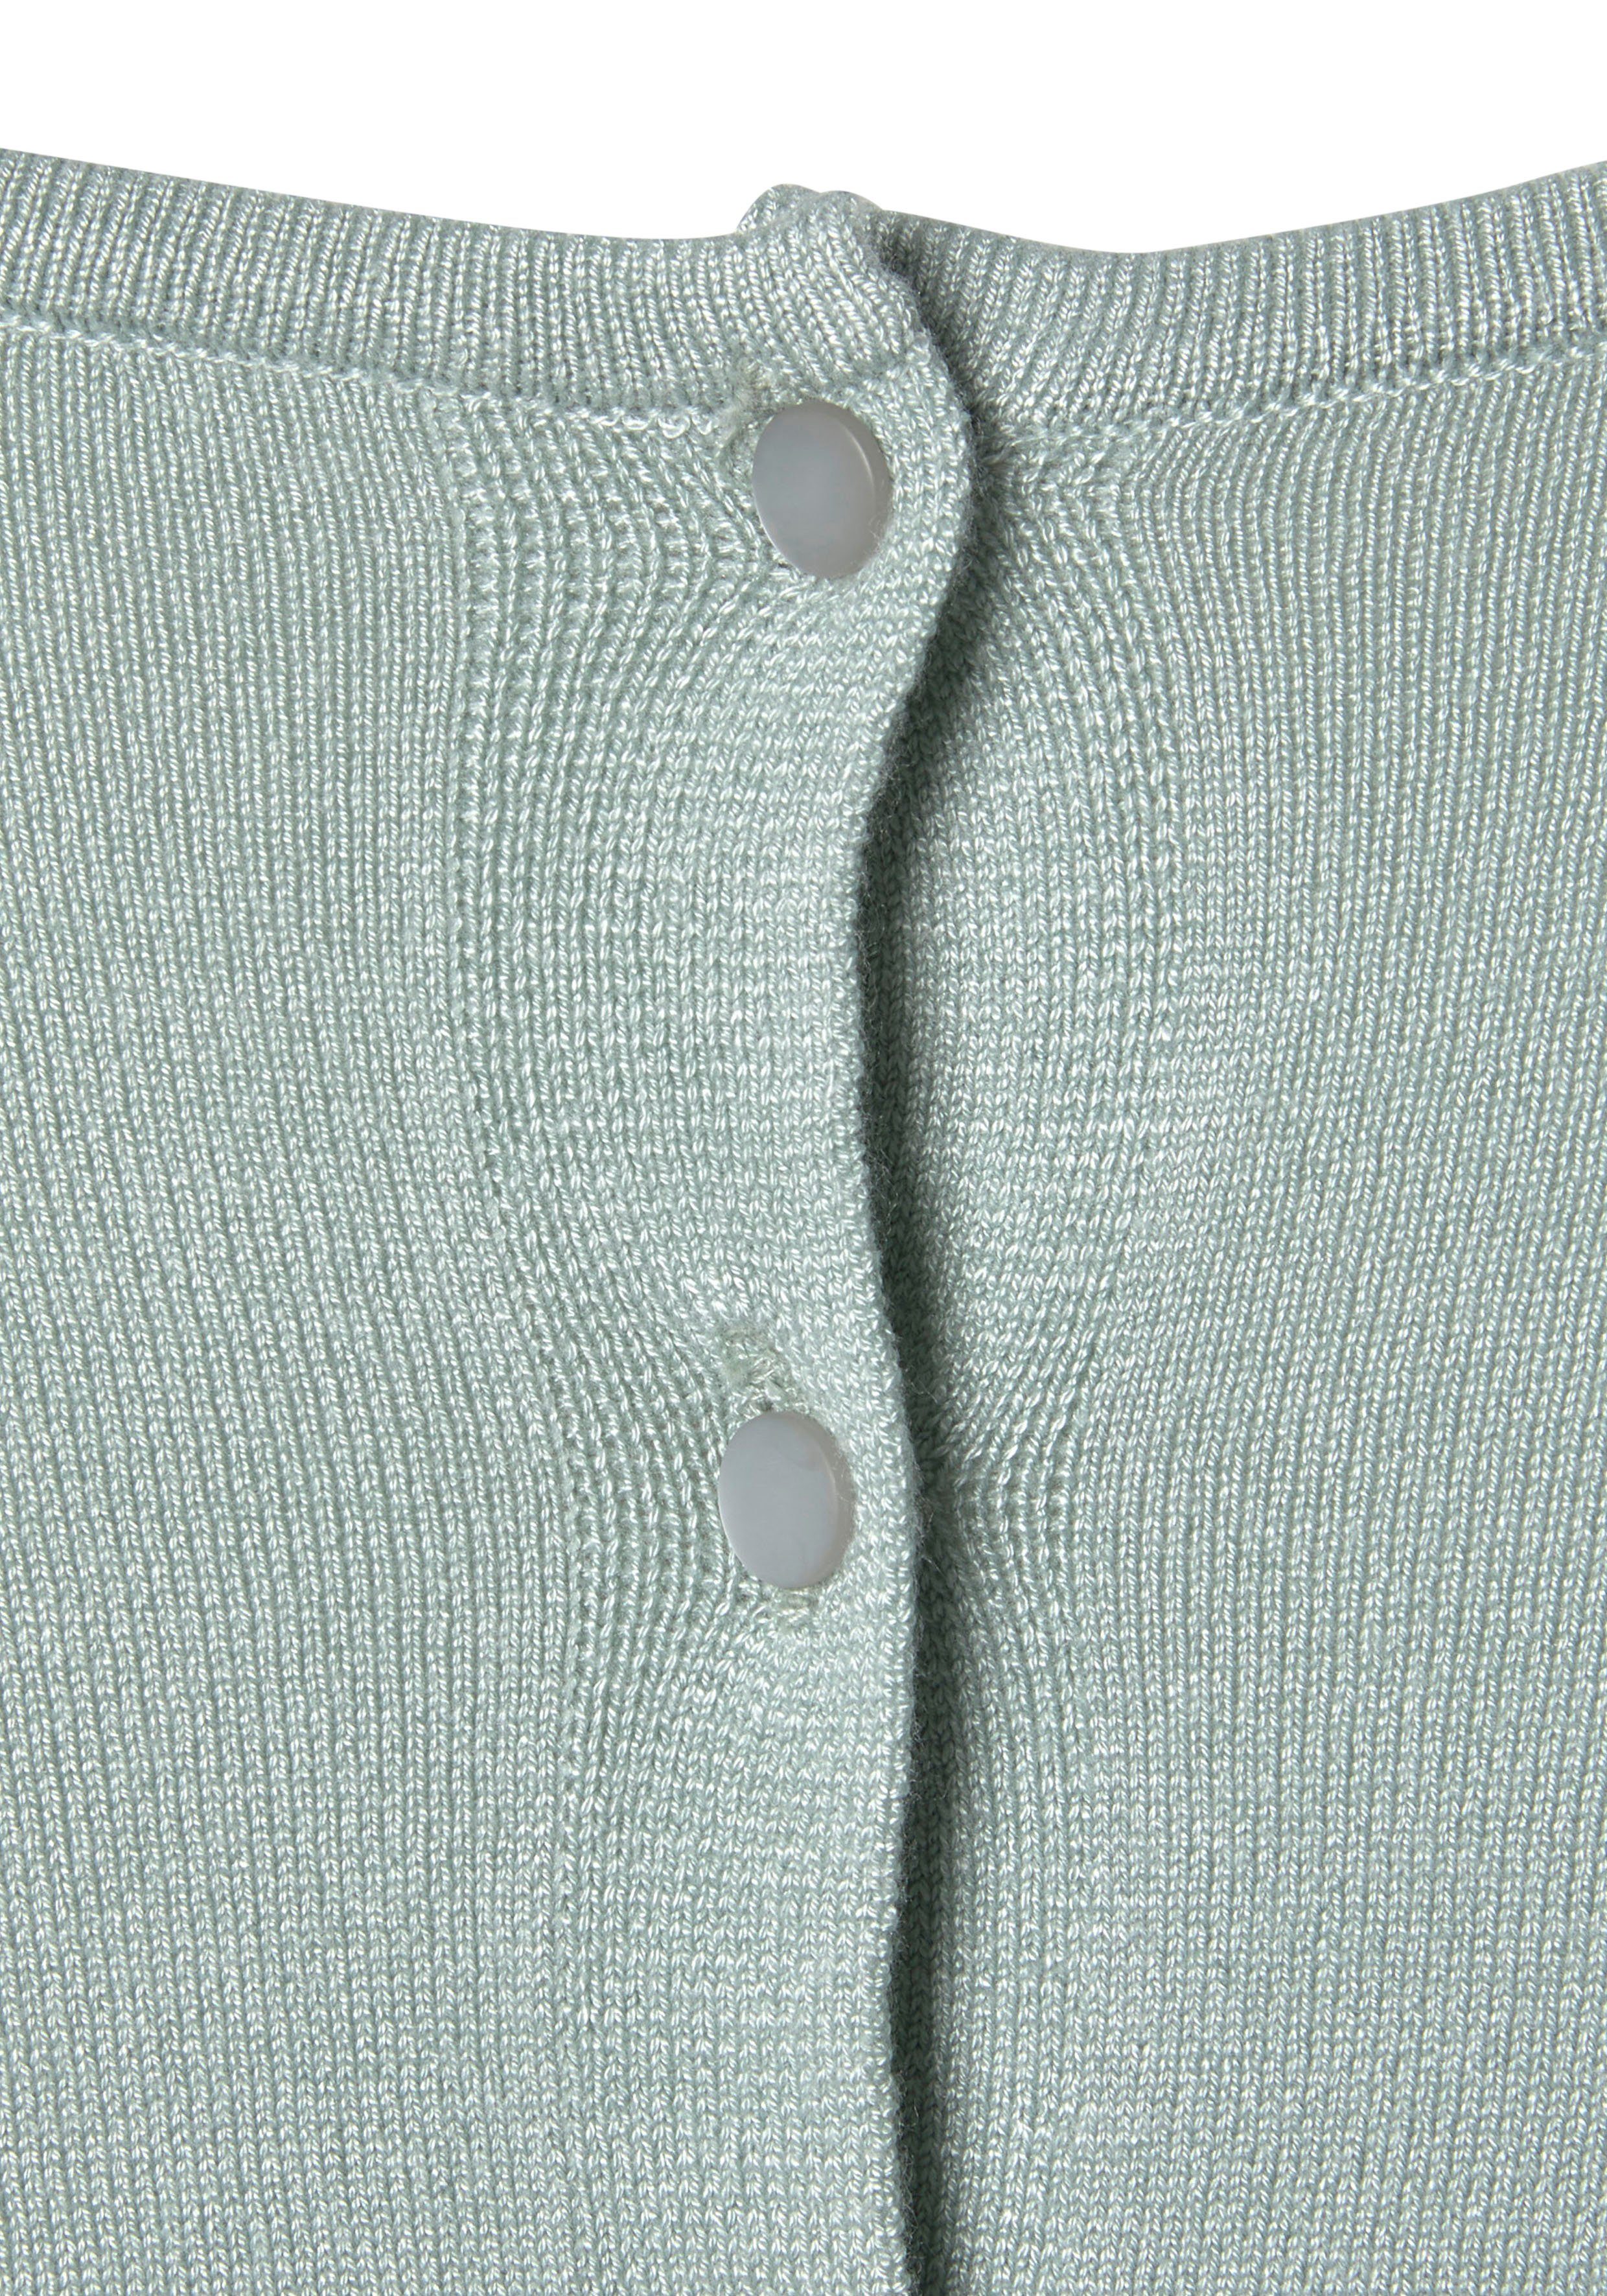 Vivance Kurzarmpullover mit Knopfleiste, beidseitig tragbar, hellgrün Feinstrickqualität 3/4-Pullover